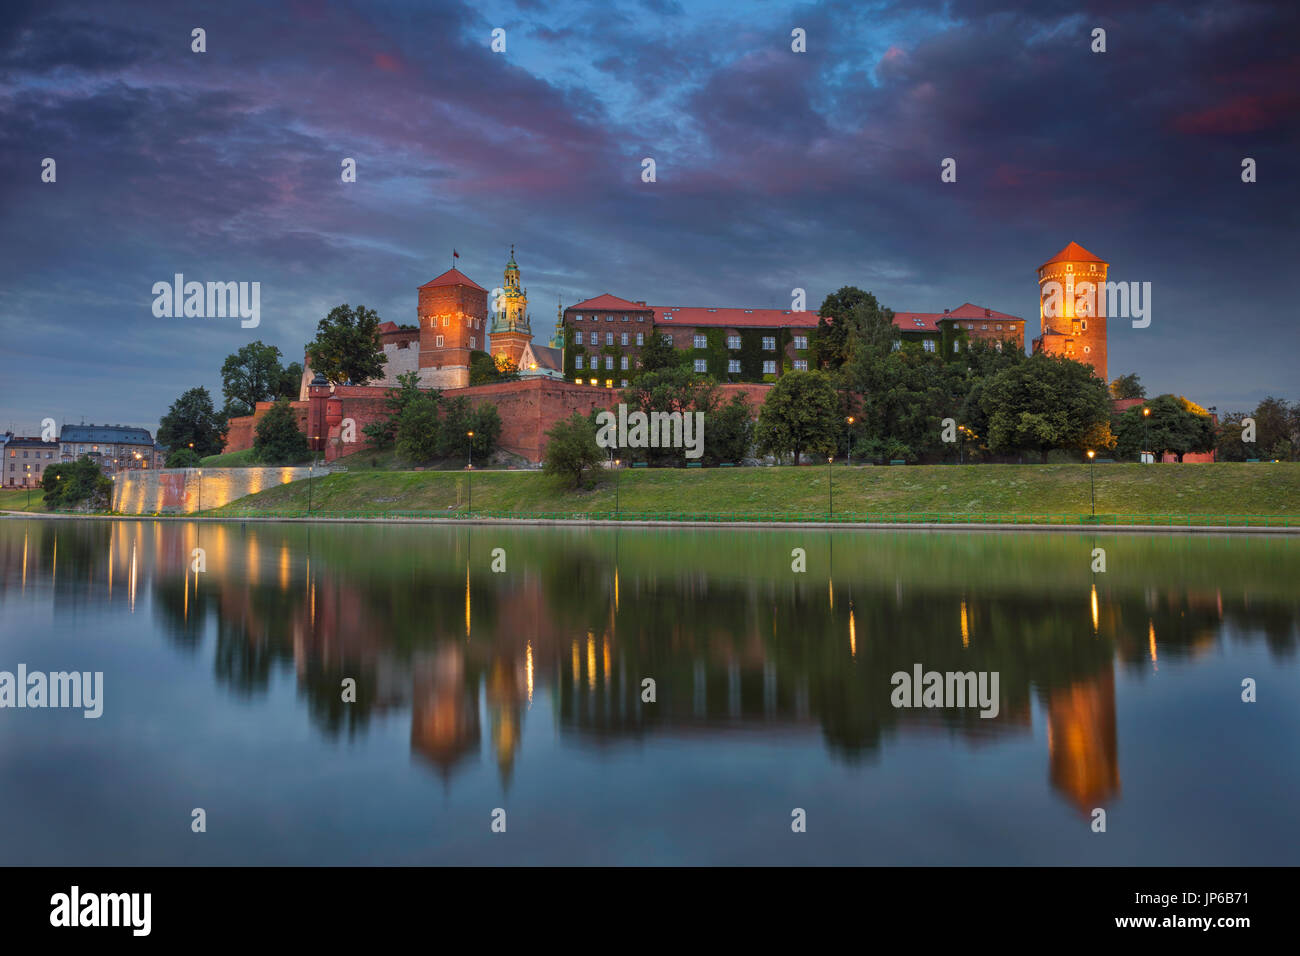 Krakow. Image of old town Krakow, Poland during twilight blue hour. Stock Photo